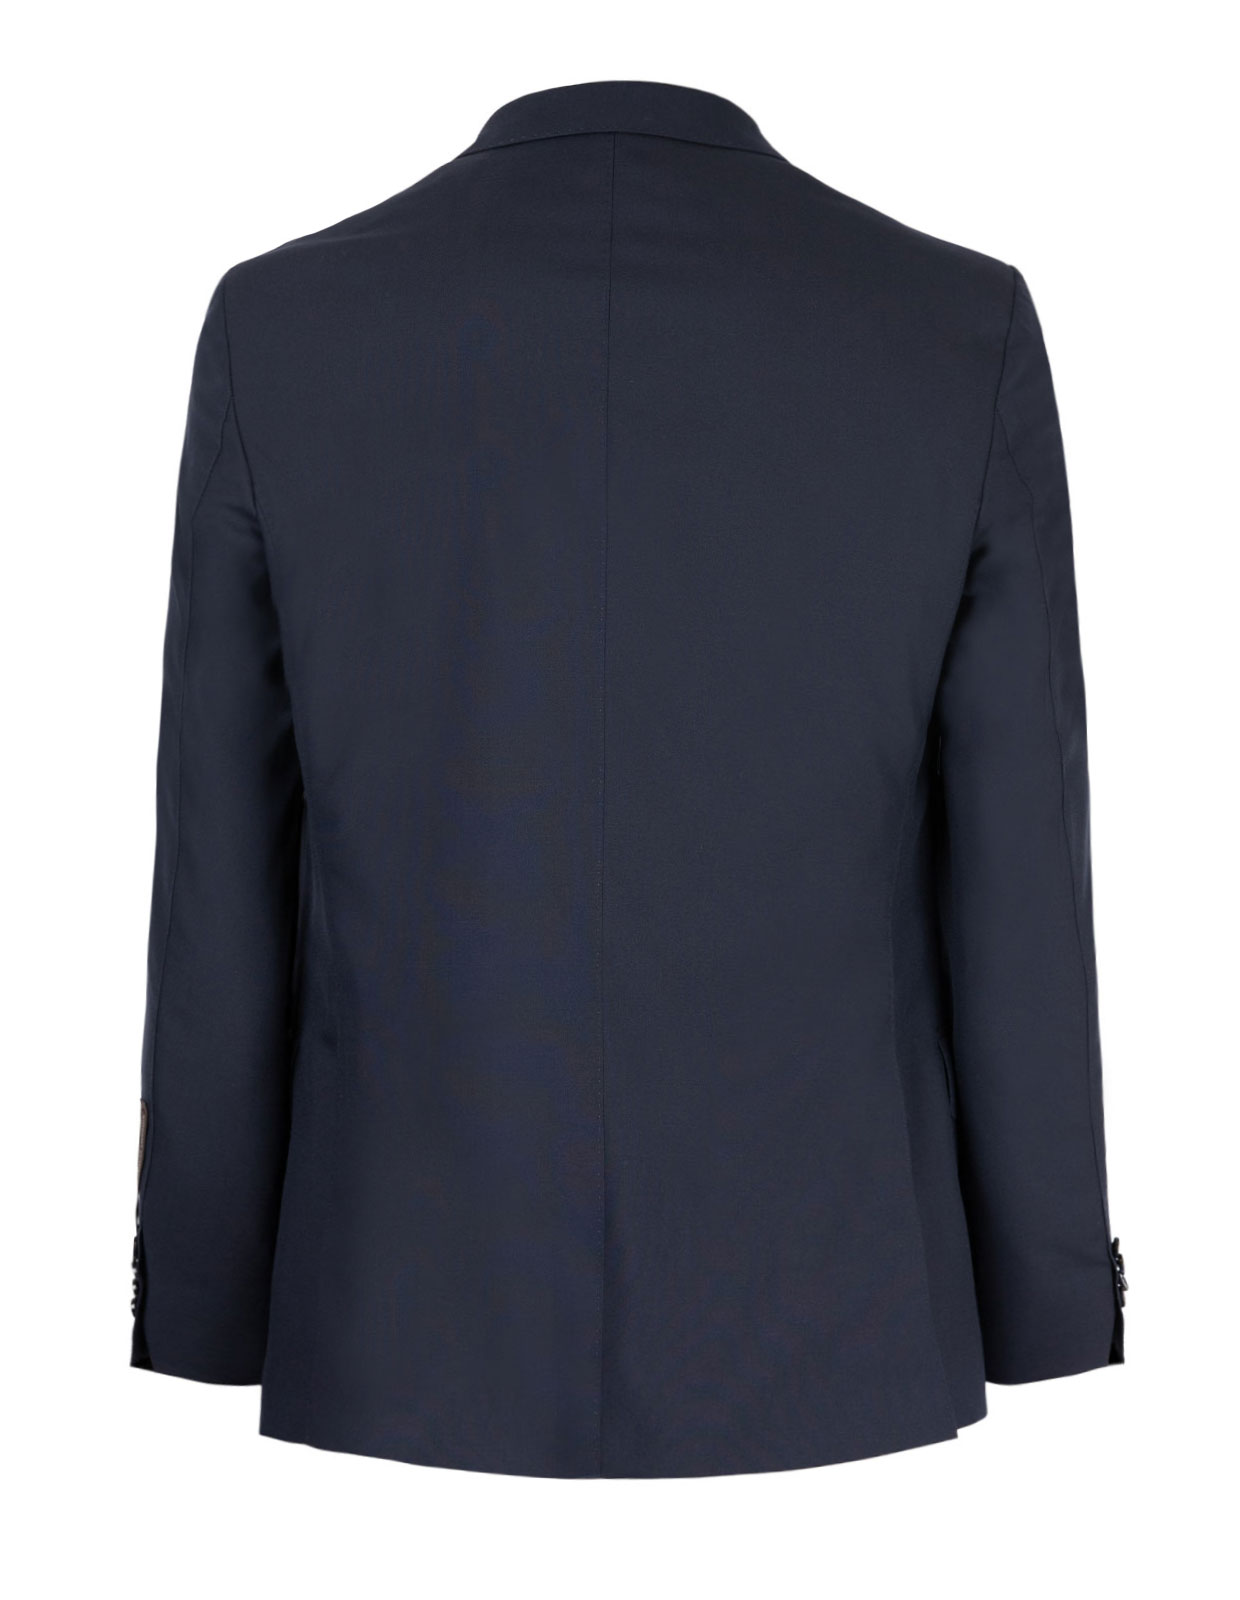 Falk Suit Jacket Regular Fit Mix & Match Wool Navy